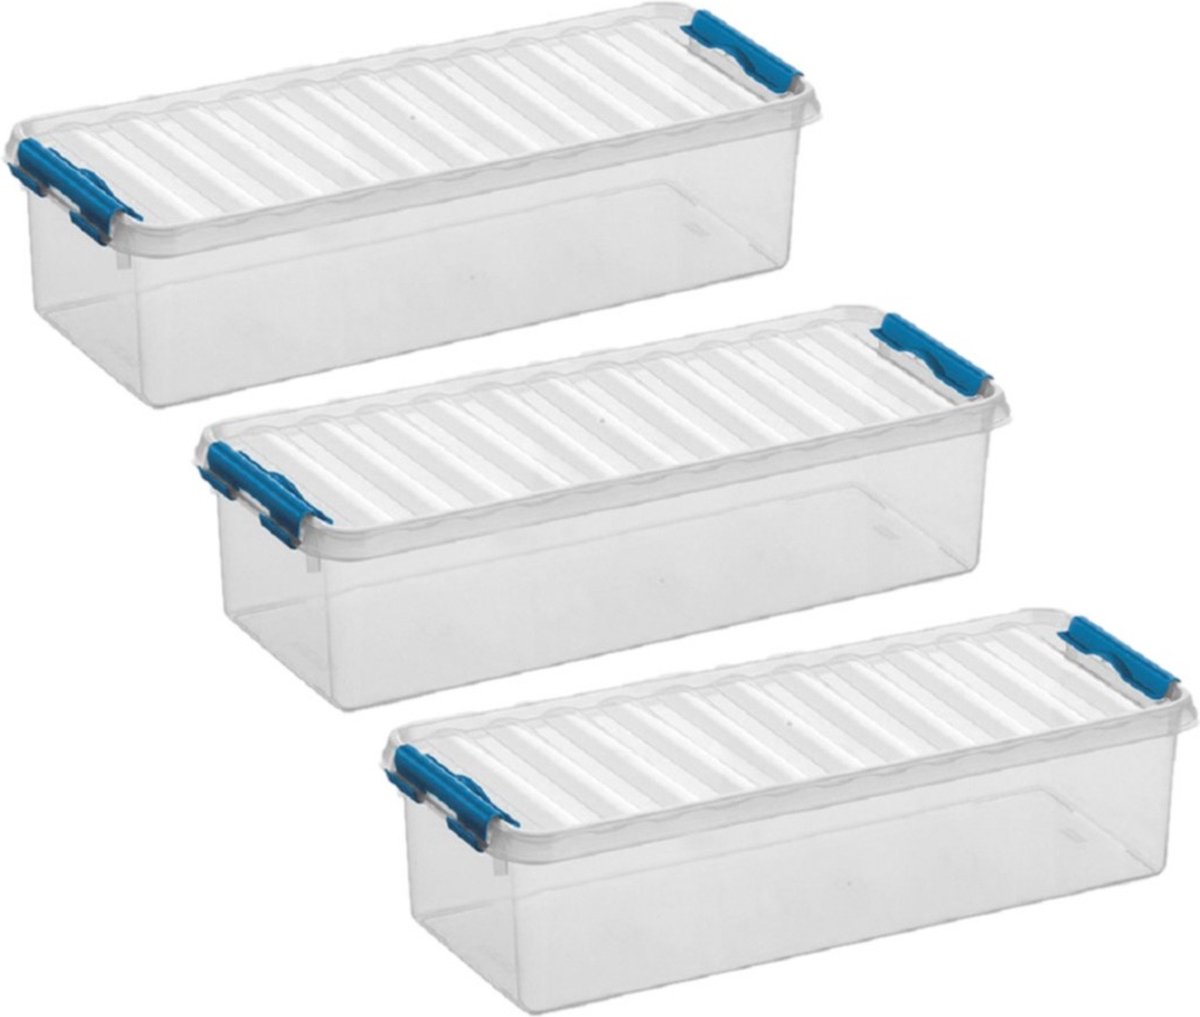 8x stuks opberg box/opbergdoos 3.5 liter 38.5 x 14 x 9.2 cm - Opslagbox - Opbergbak kunststof transparant/blauw